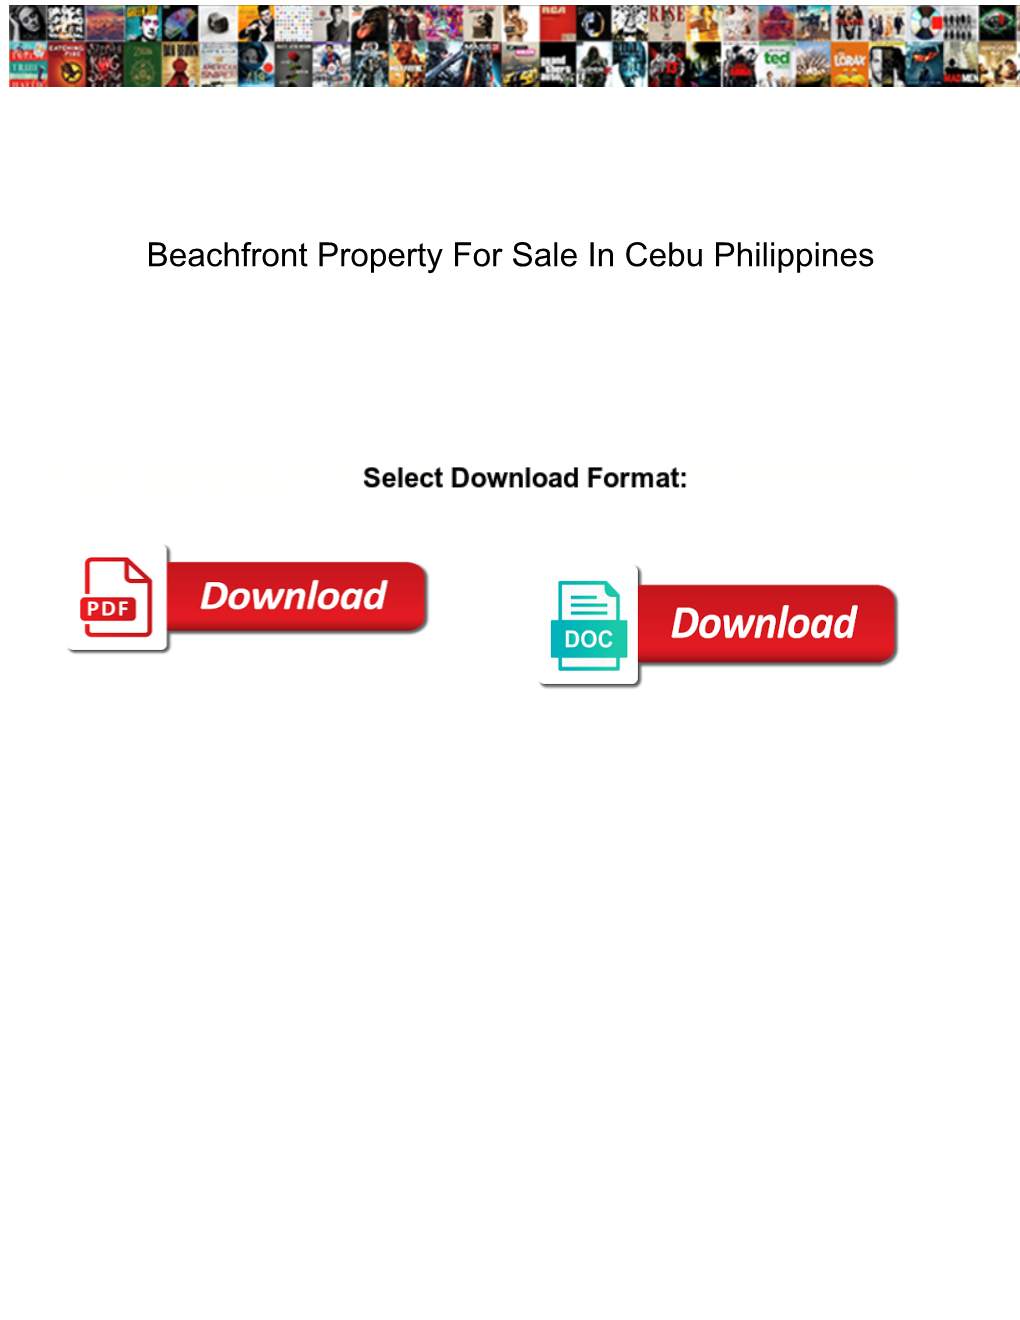 Beachfront Property for Sale in Cebu Philippines